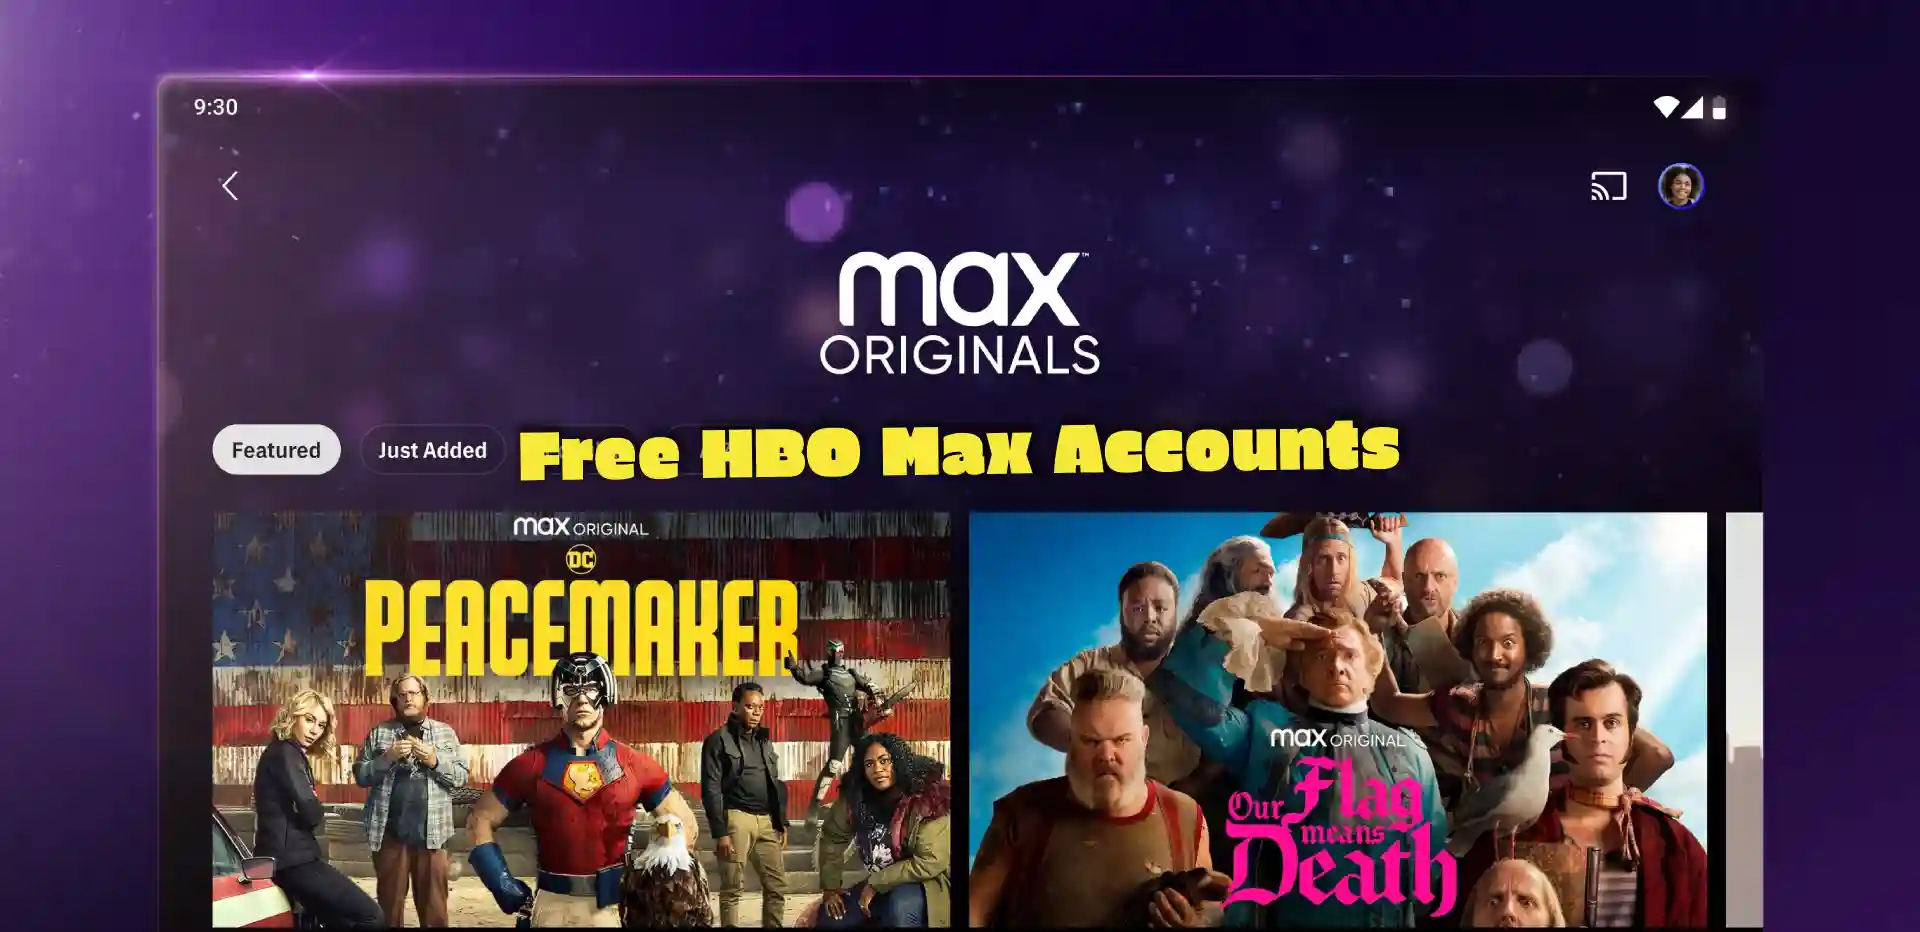  Free HBO Max Accounts